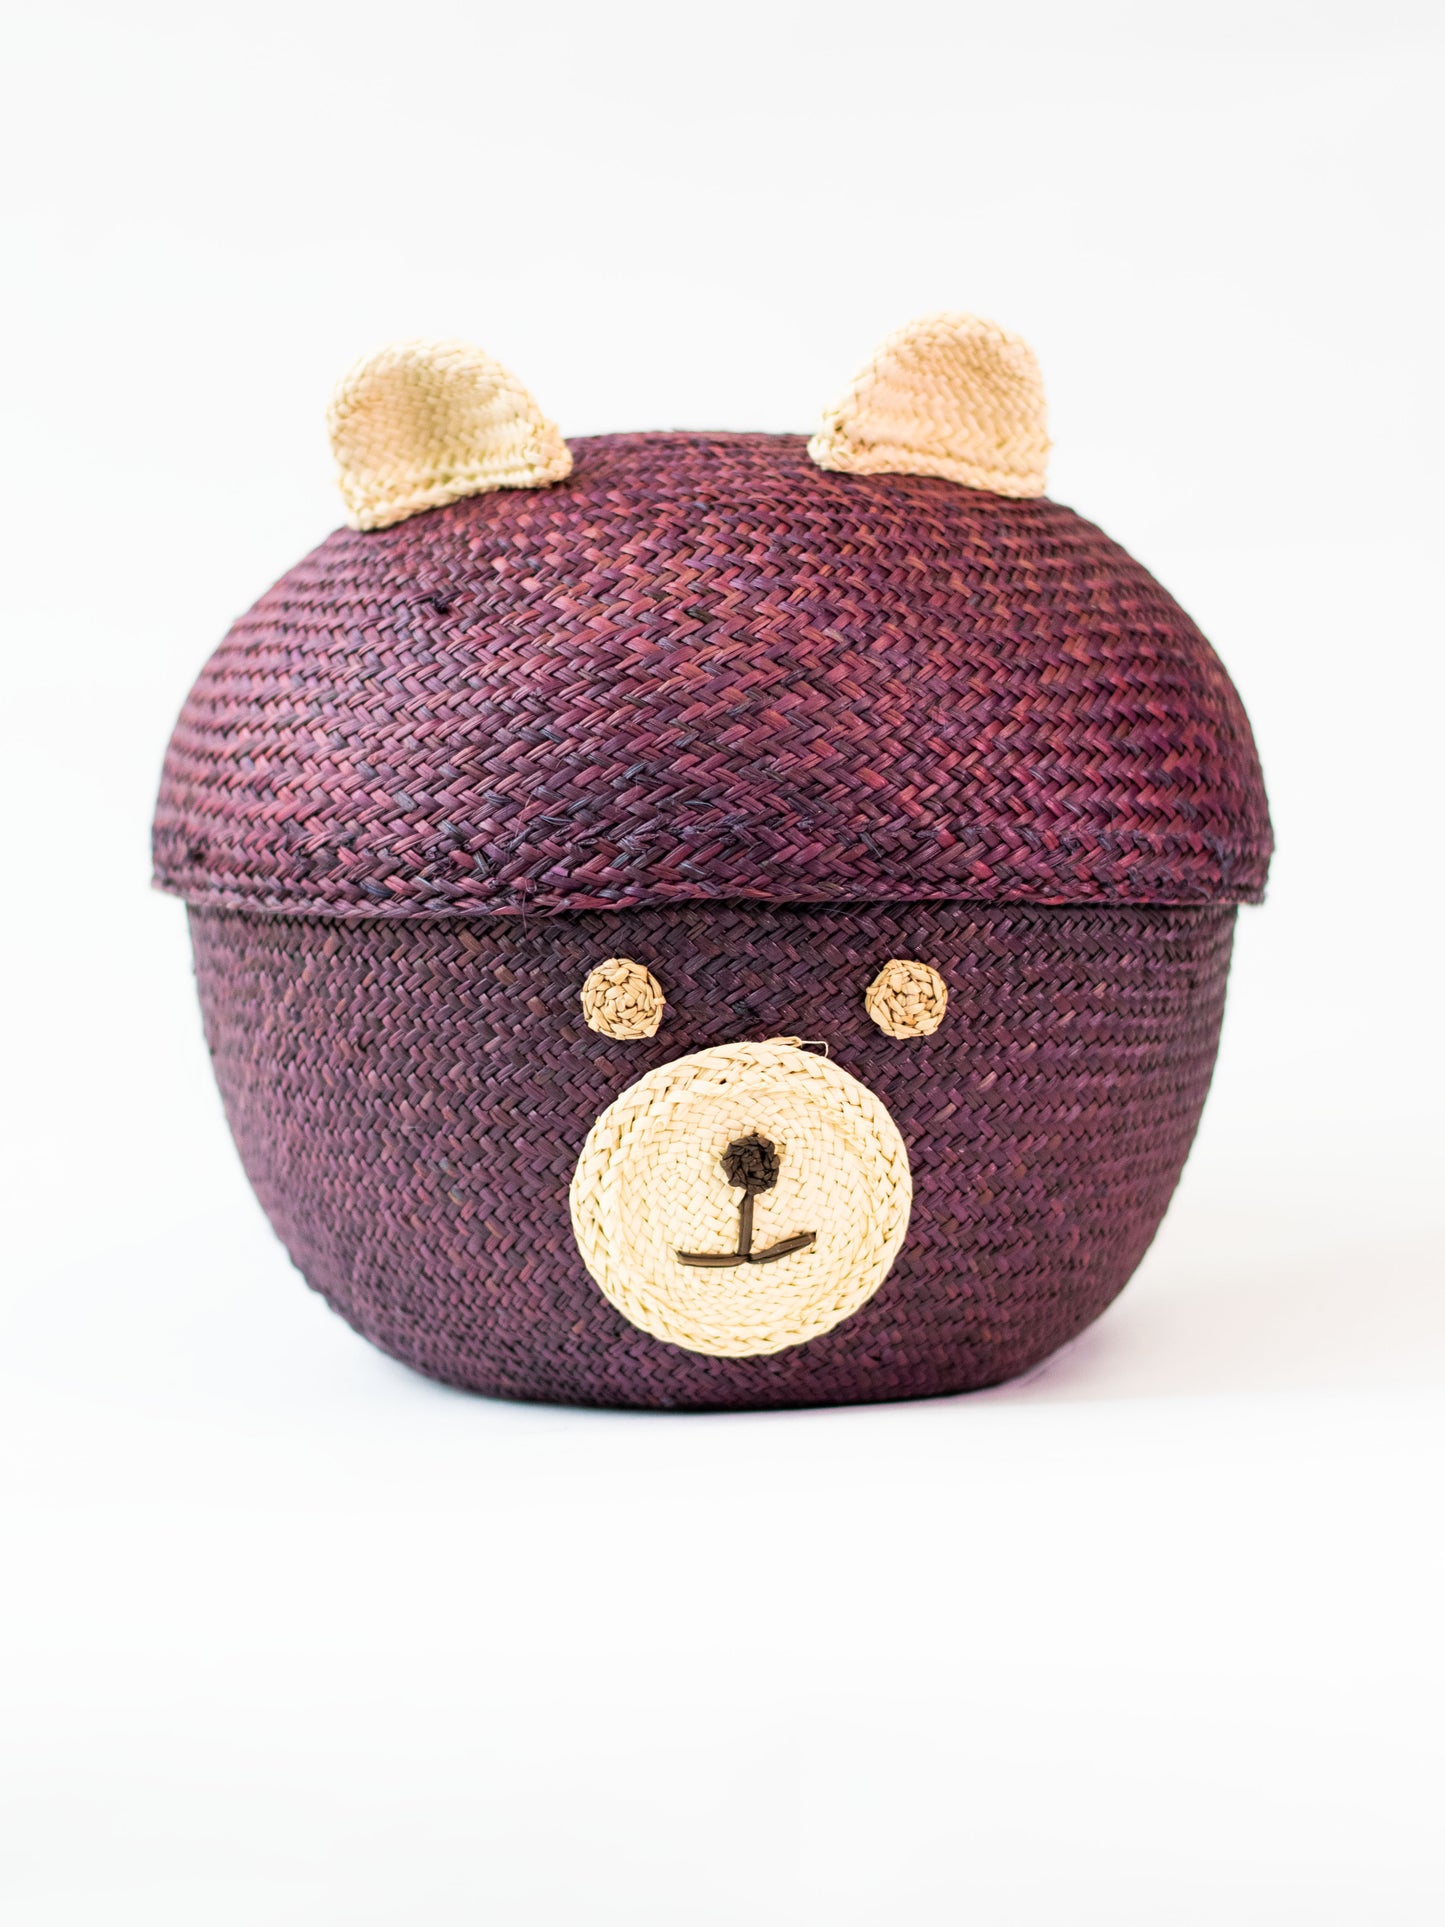 Bear decorative basket